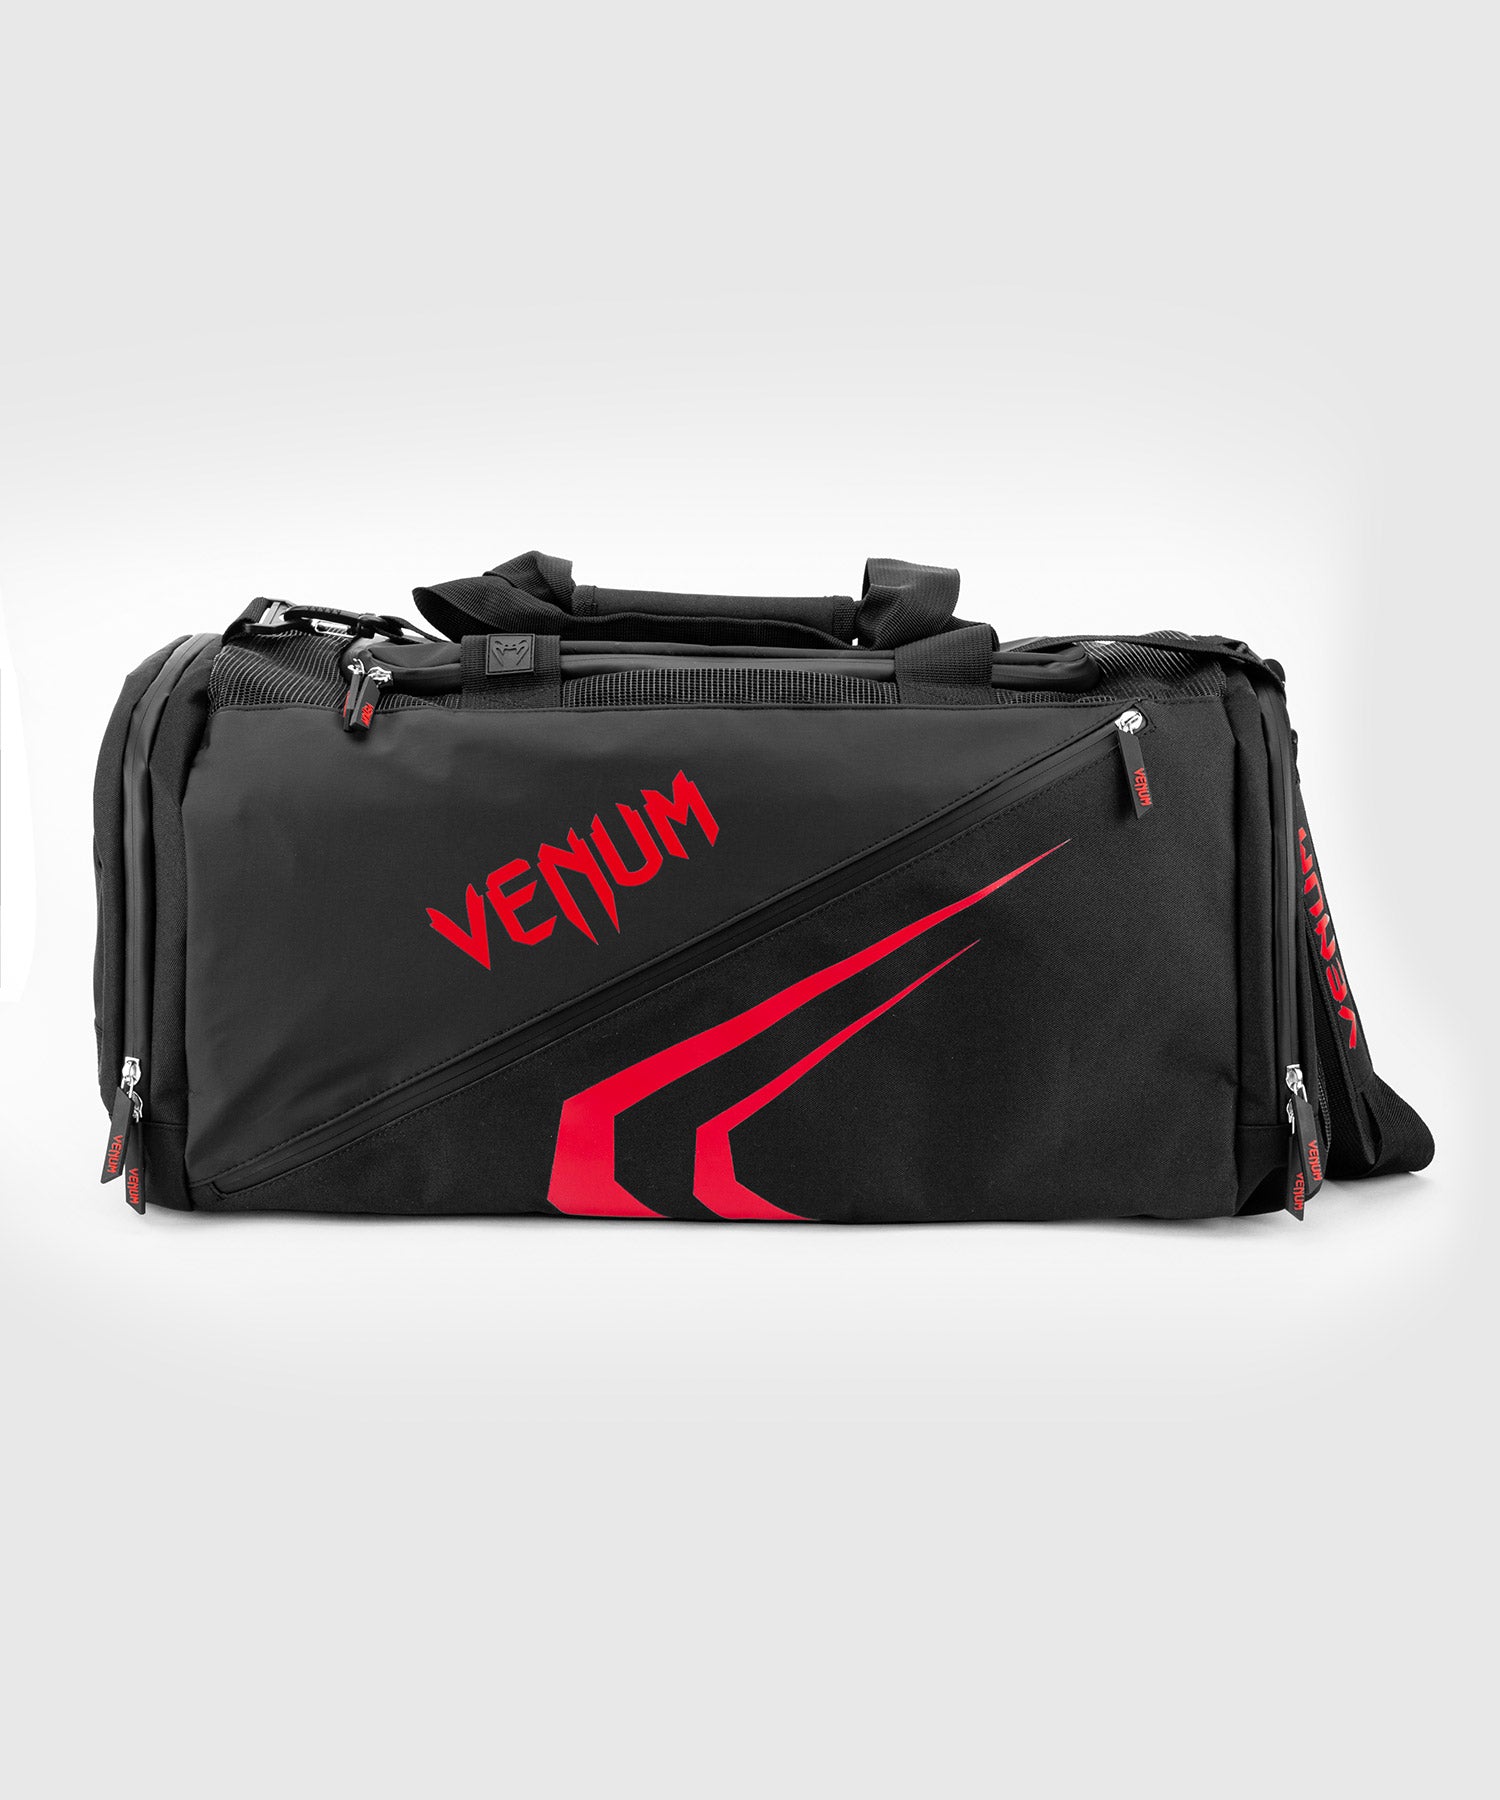 Sac de sport Venum Trainer Lite Evo – Venum France